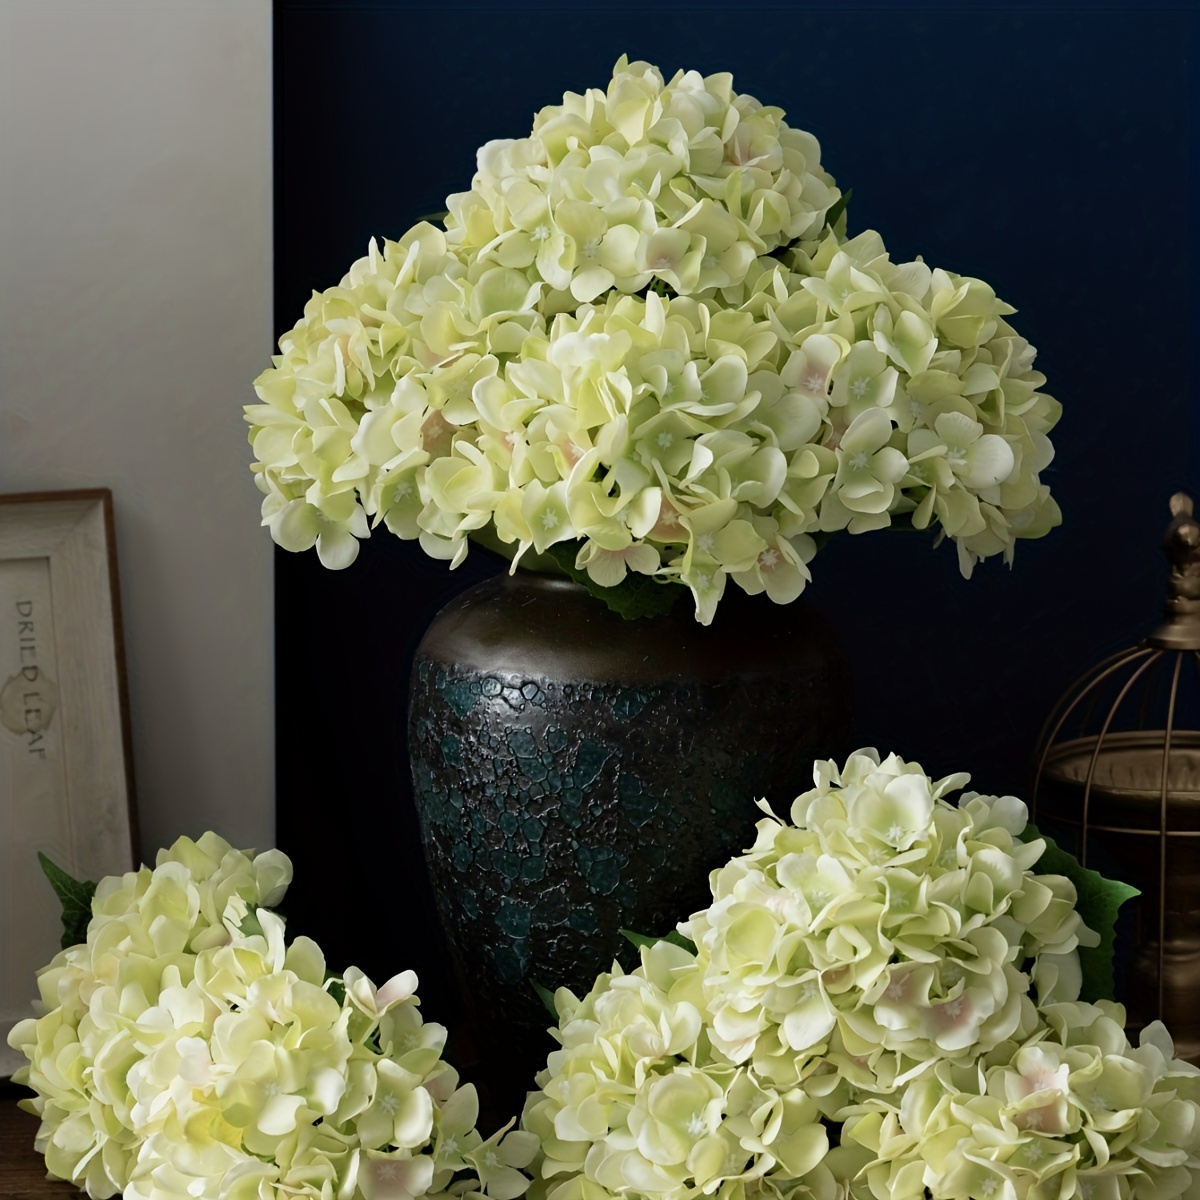 

3pcs, Real Touch Hydrangea Artificial Flowers, Faux Flowers For Home Floral Arrangements Wedding Bouquets Kitchen Table Centerpiece Decorations